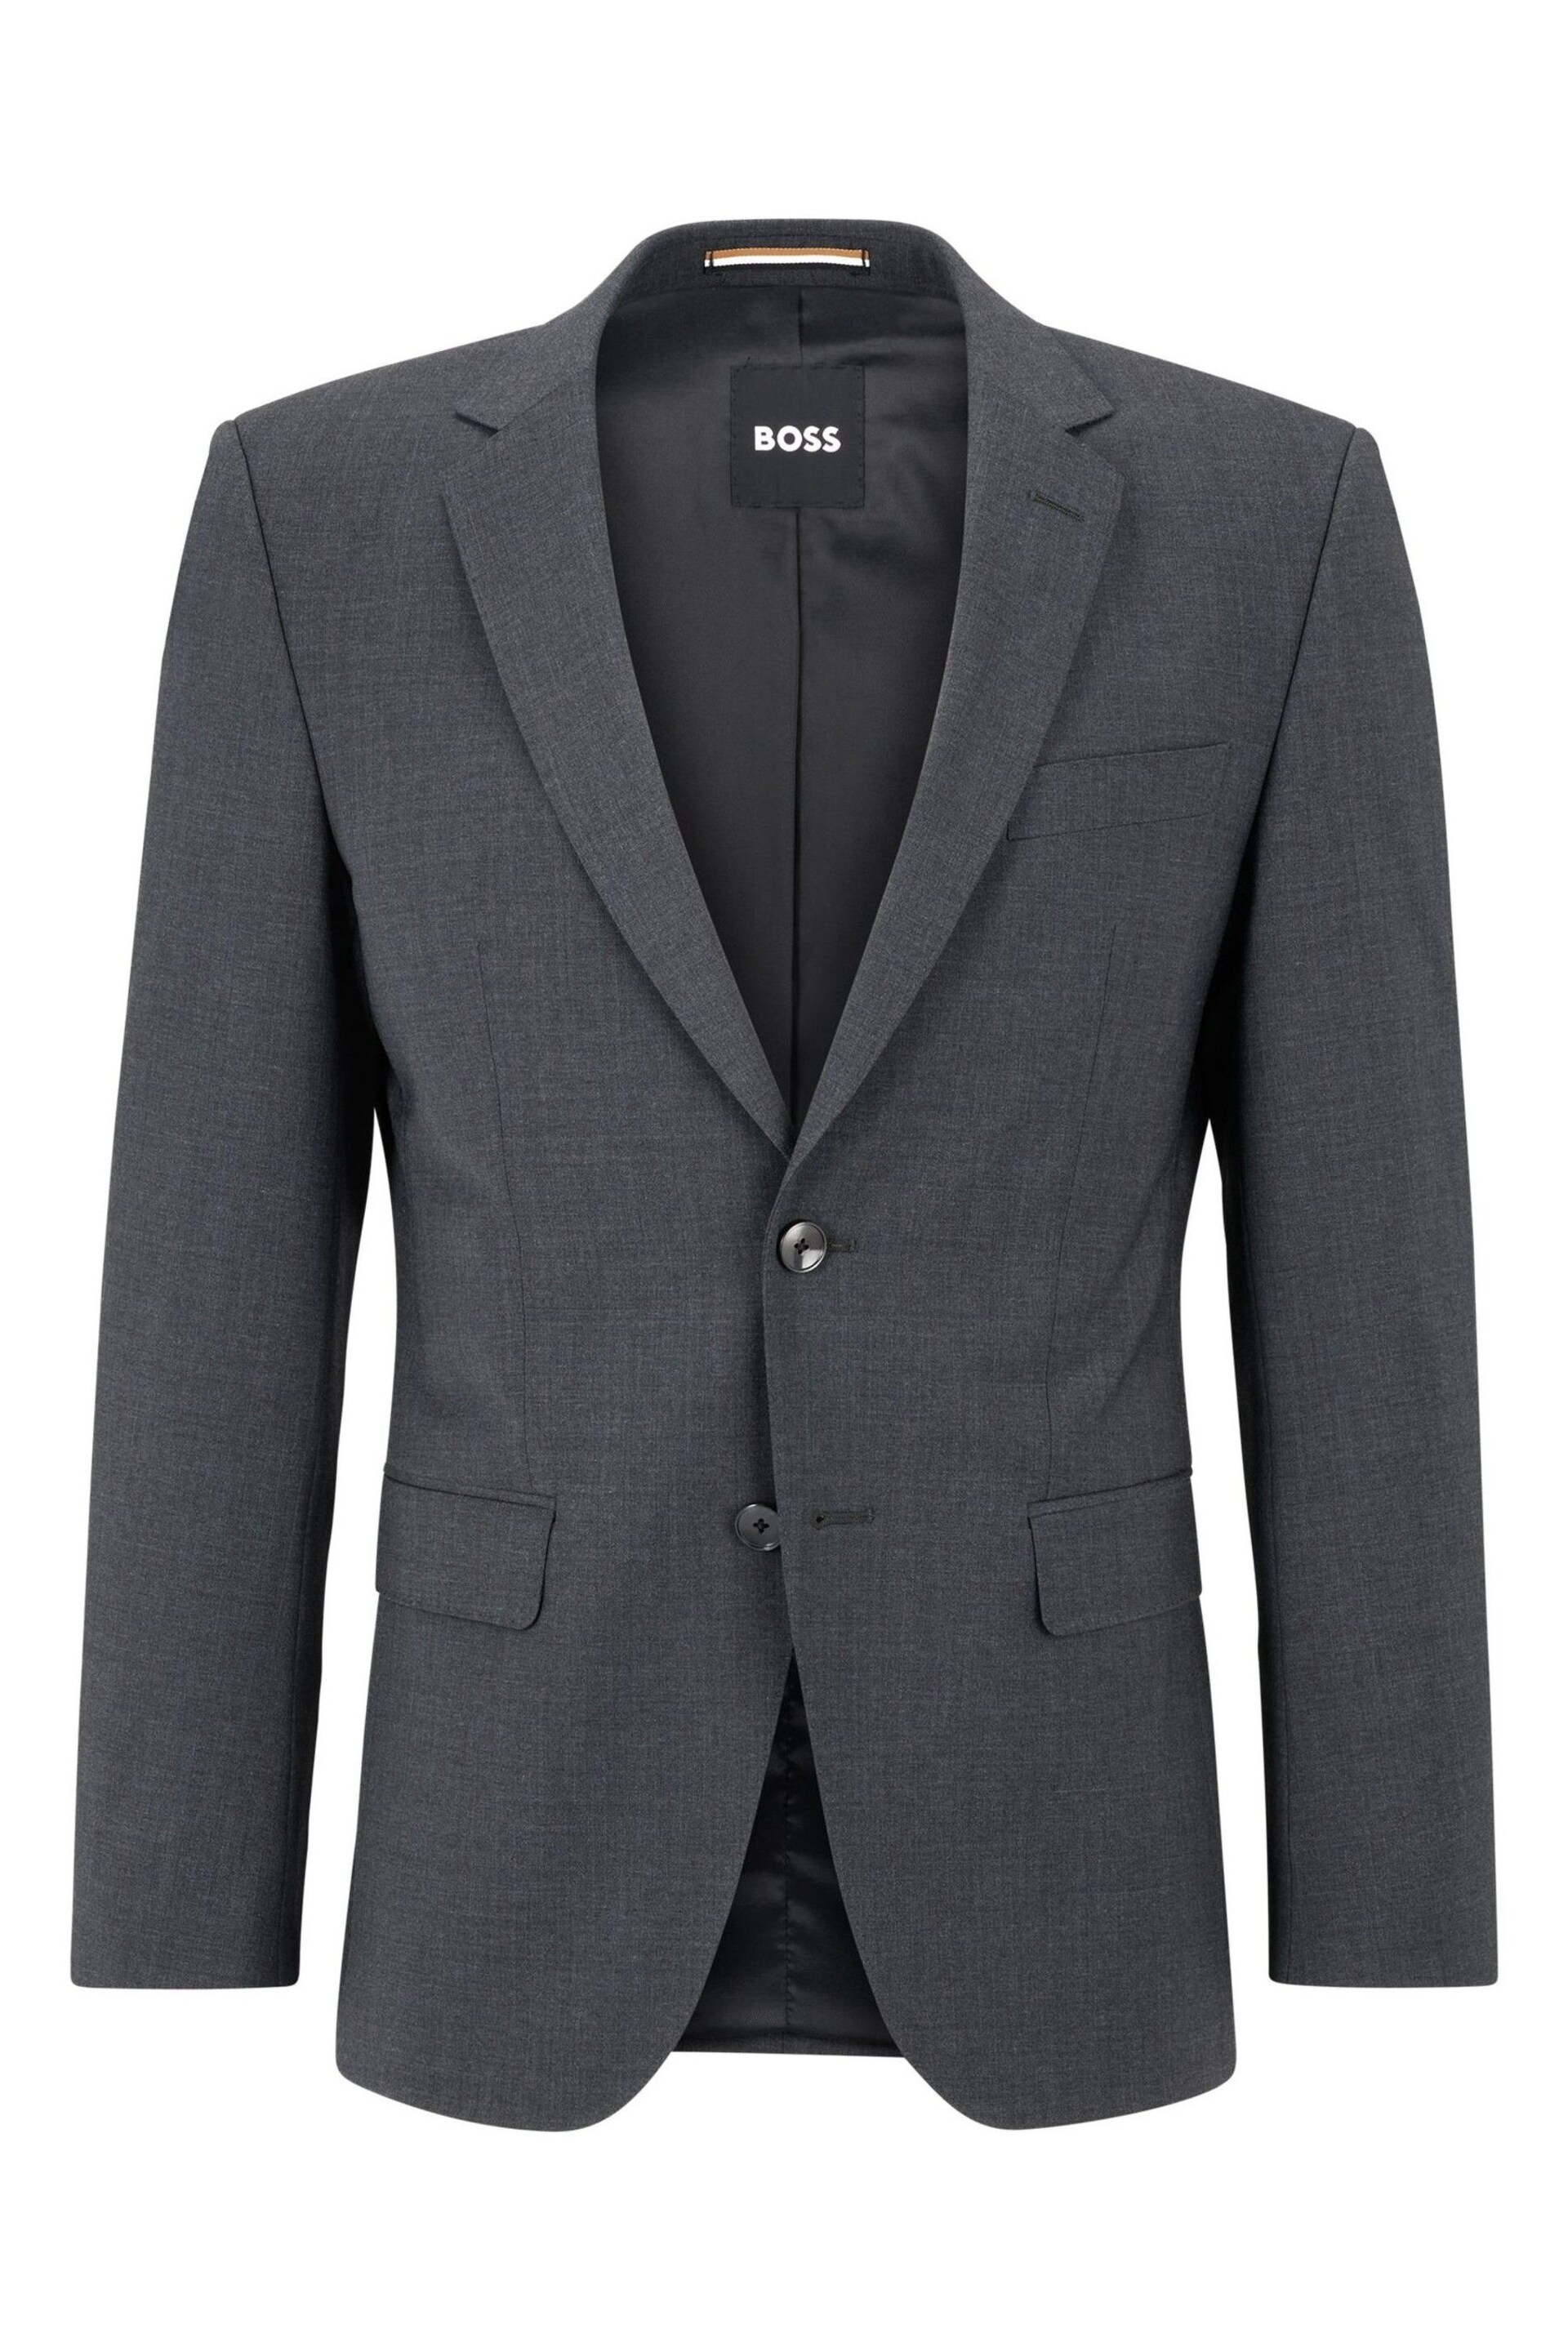 BOSS Grey Slim Fit Suit: Jacket - Image 4 of 6